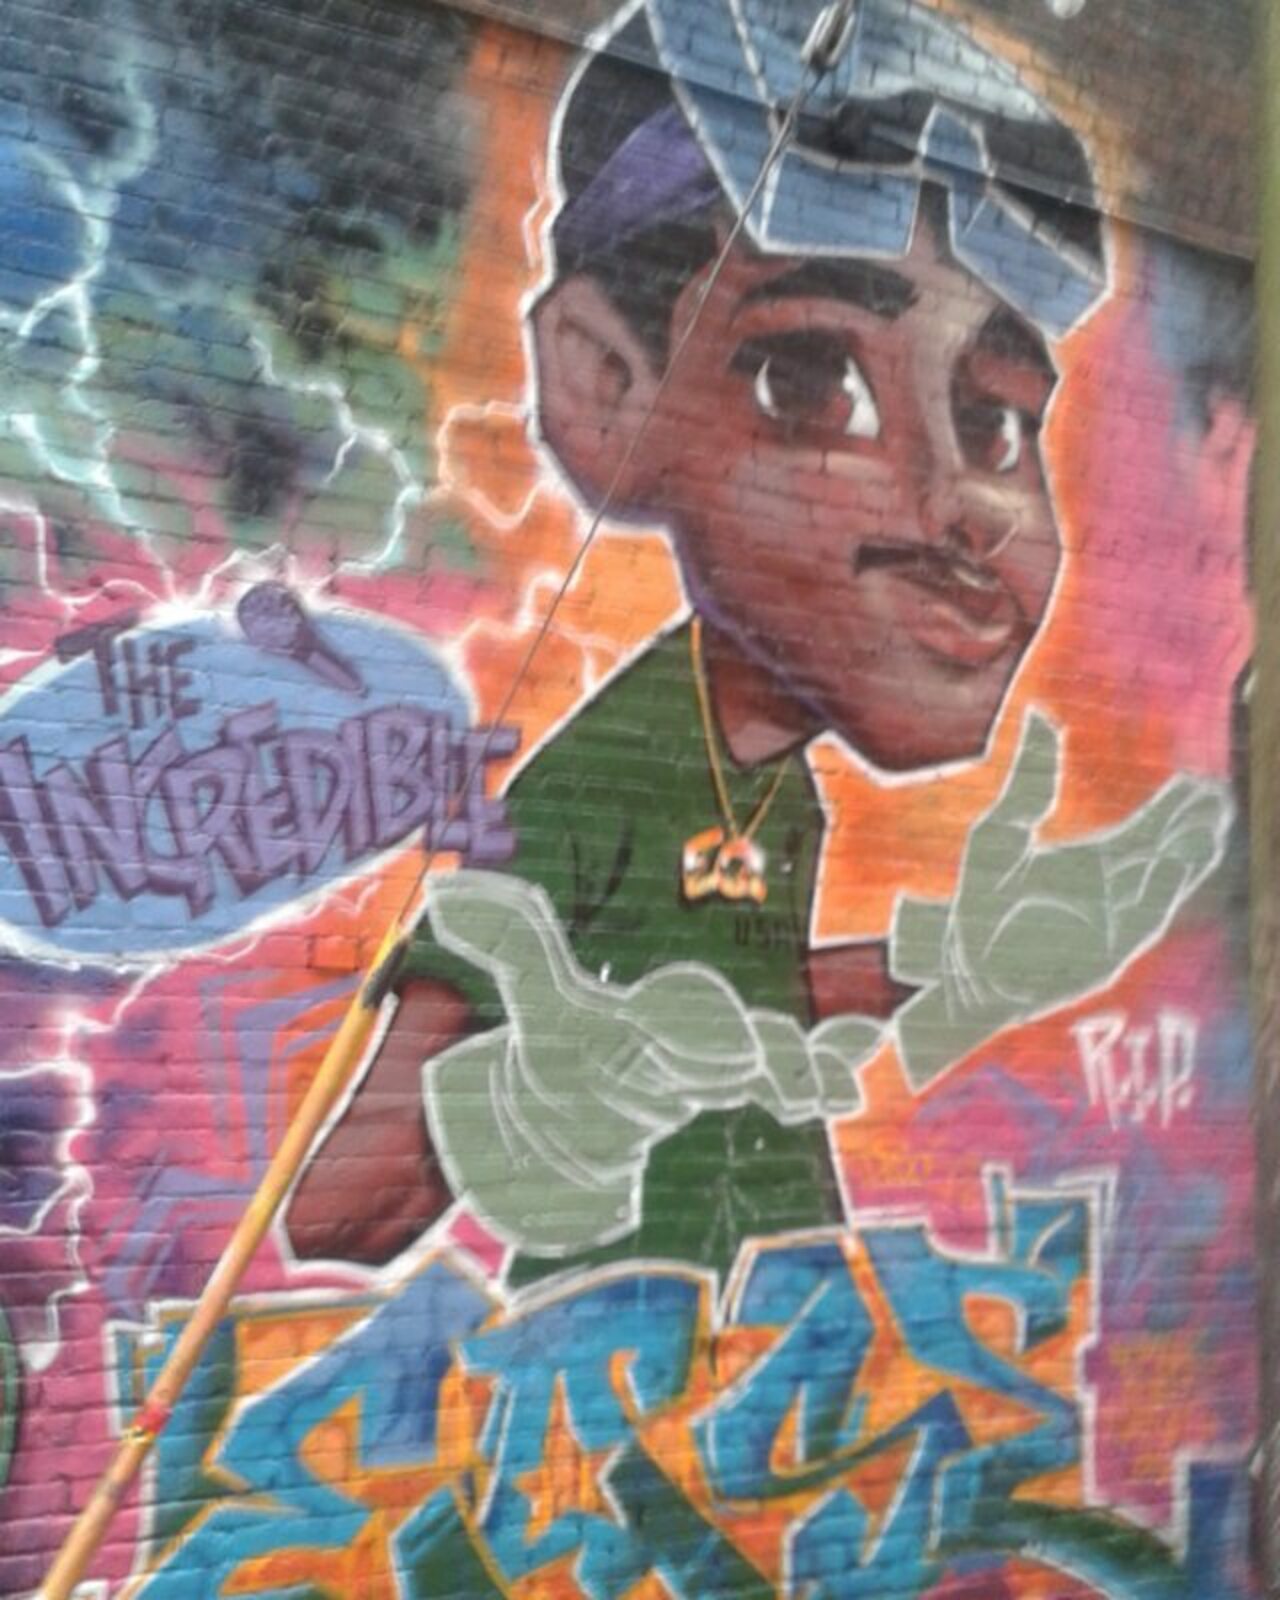 WOW check out the great photo by @crisbix22 http://ift.tt/1Mo7XKs #graffiti #streetart #vancouver #streetartvanc… https://t.co/11lTo52gwW